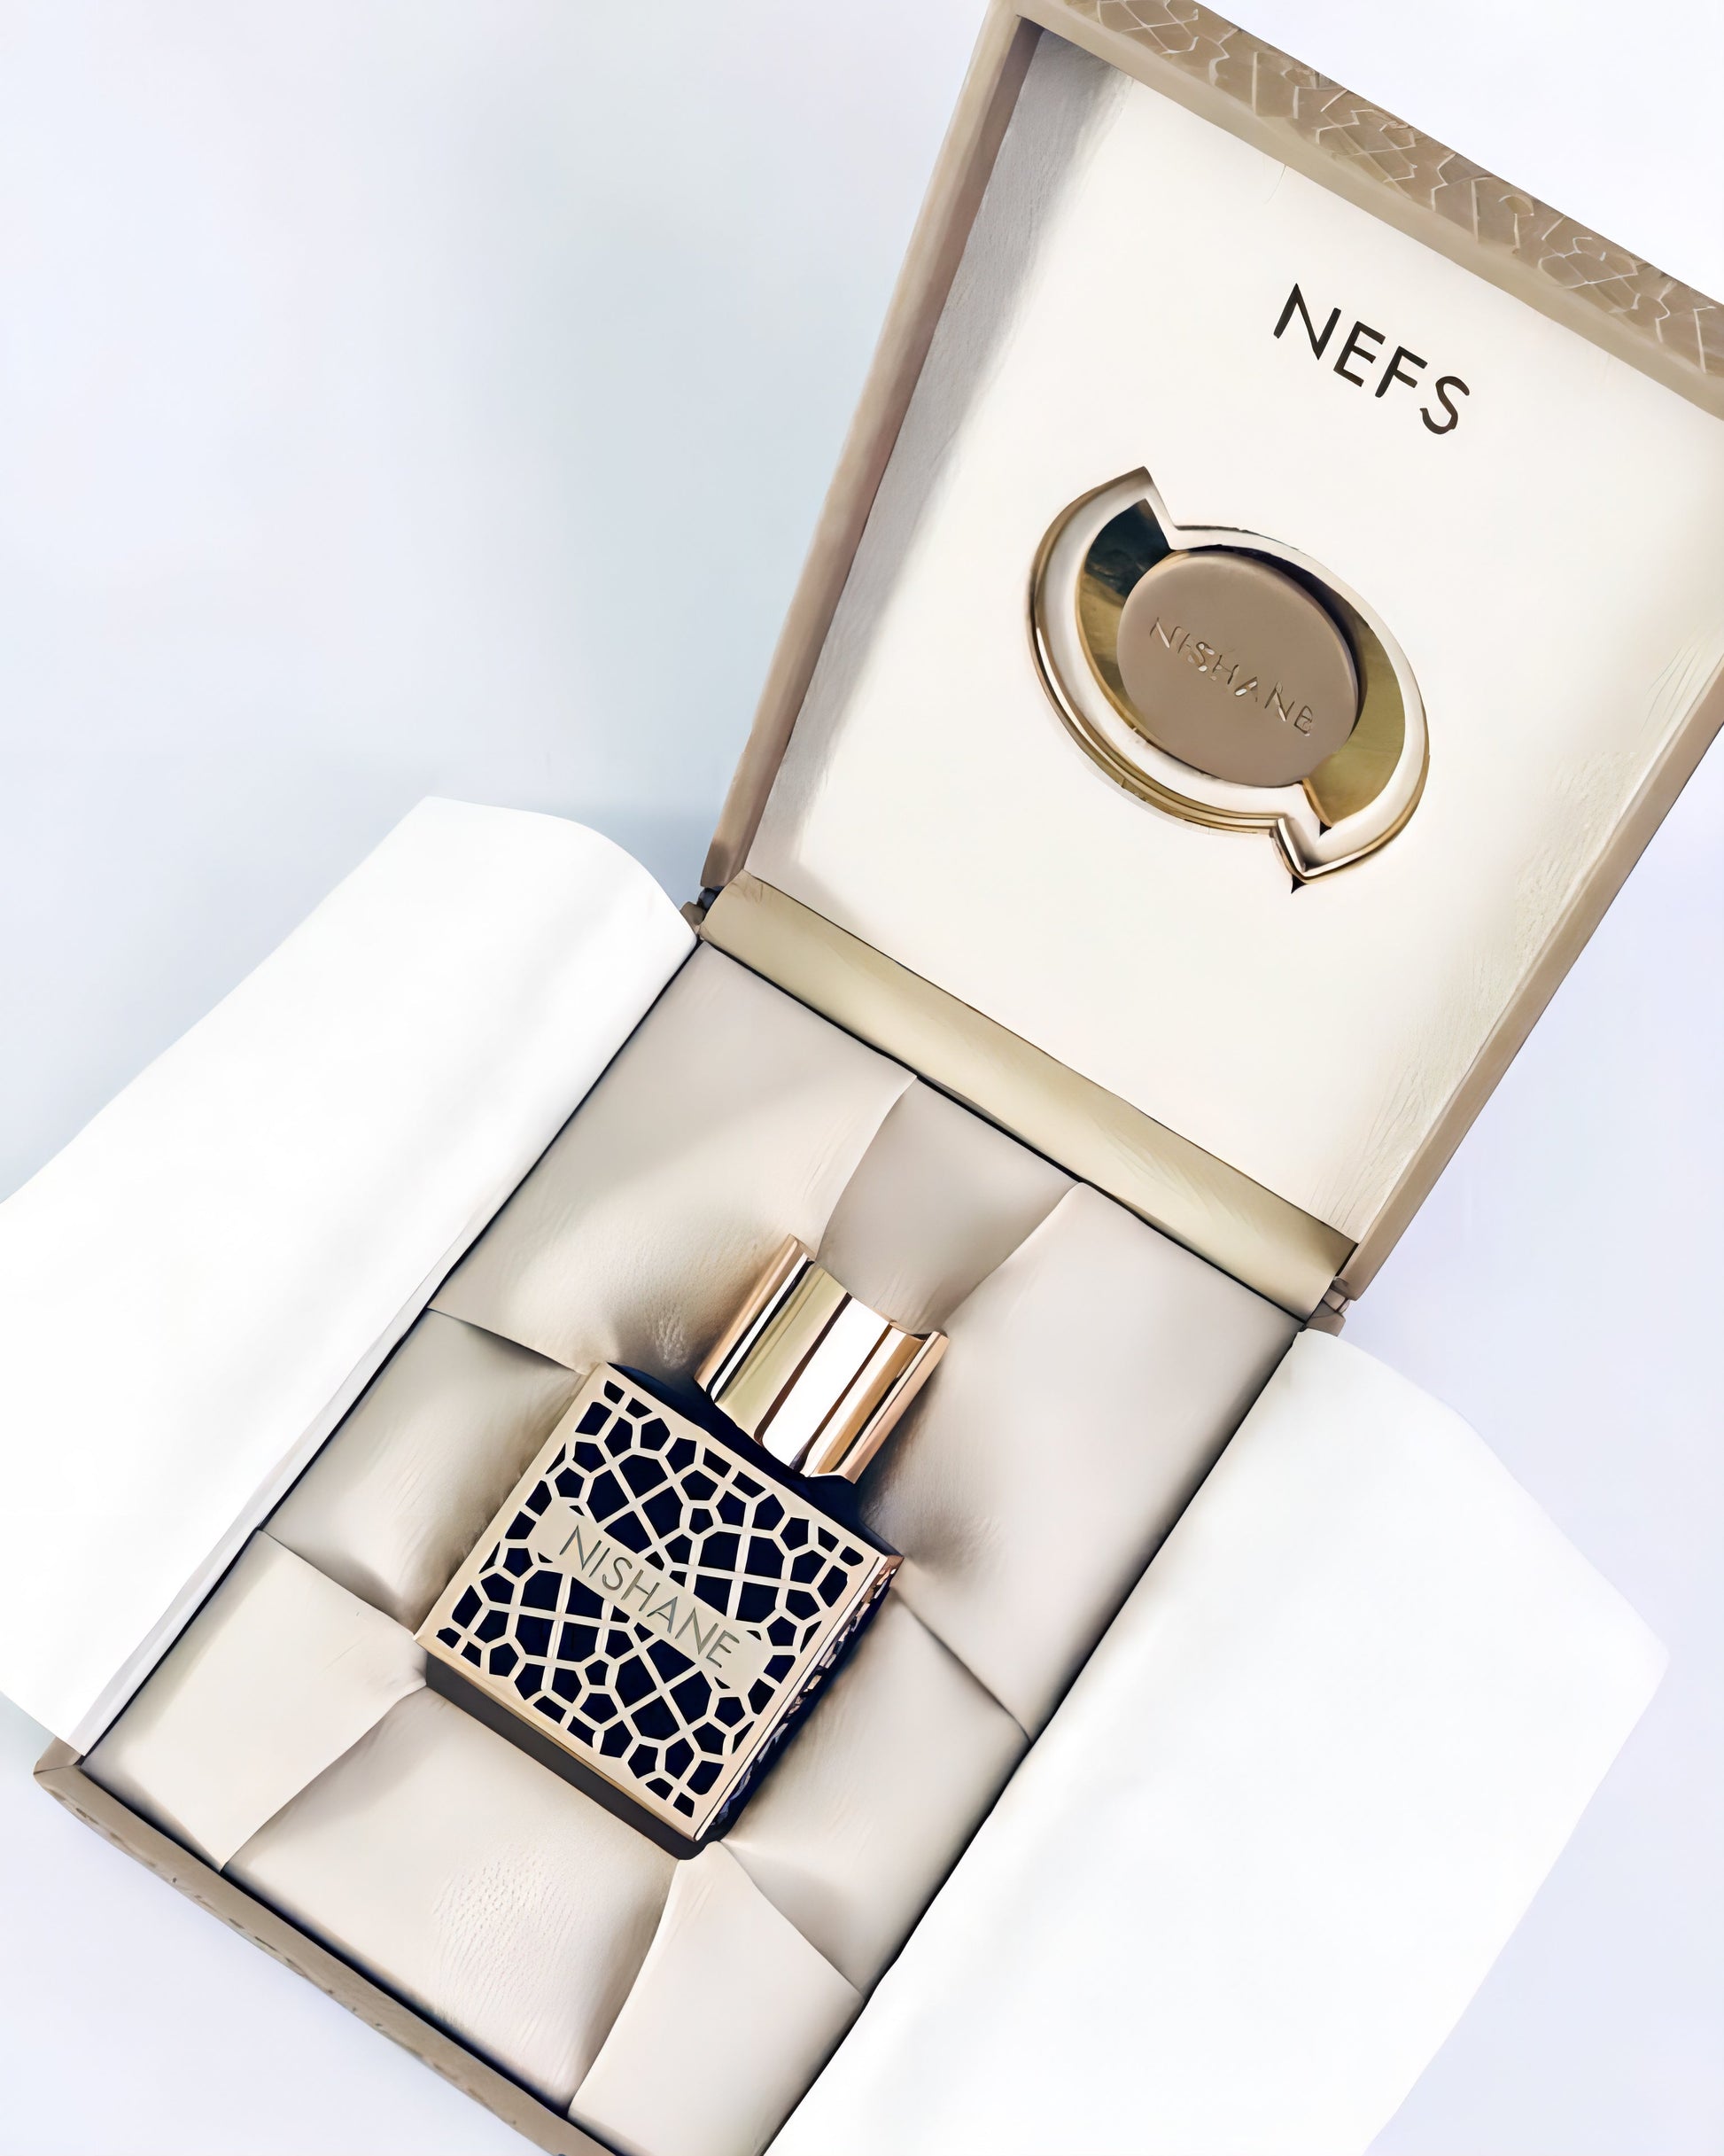 NEFS Nishane Extrait de Parfum 50 ml - Tuxedo.no - NisjeParfymer - Oslo Norway